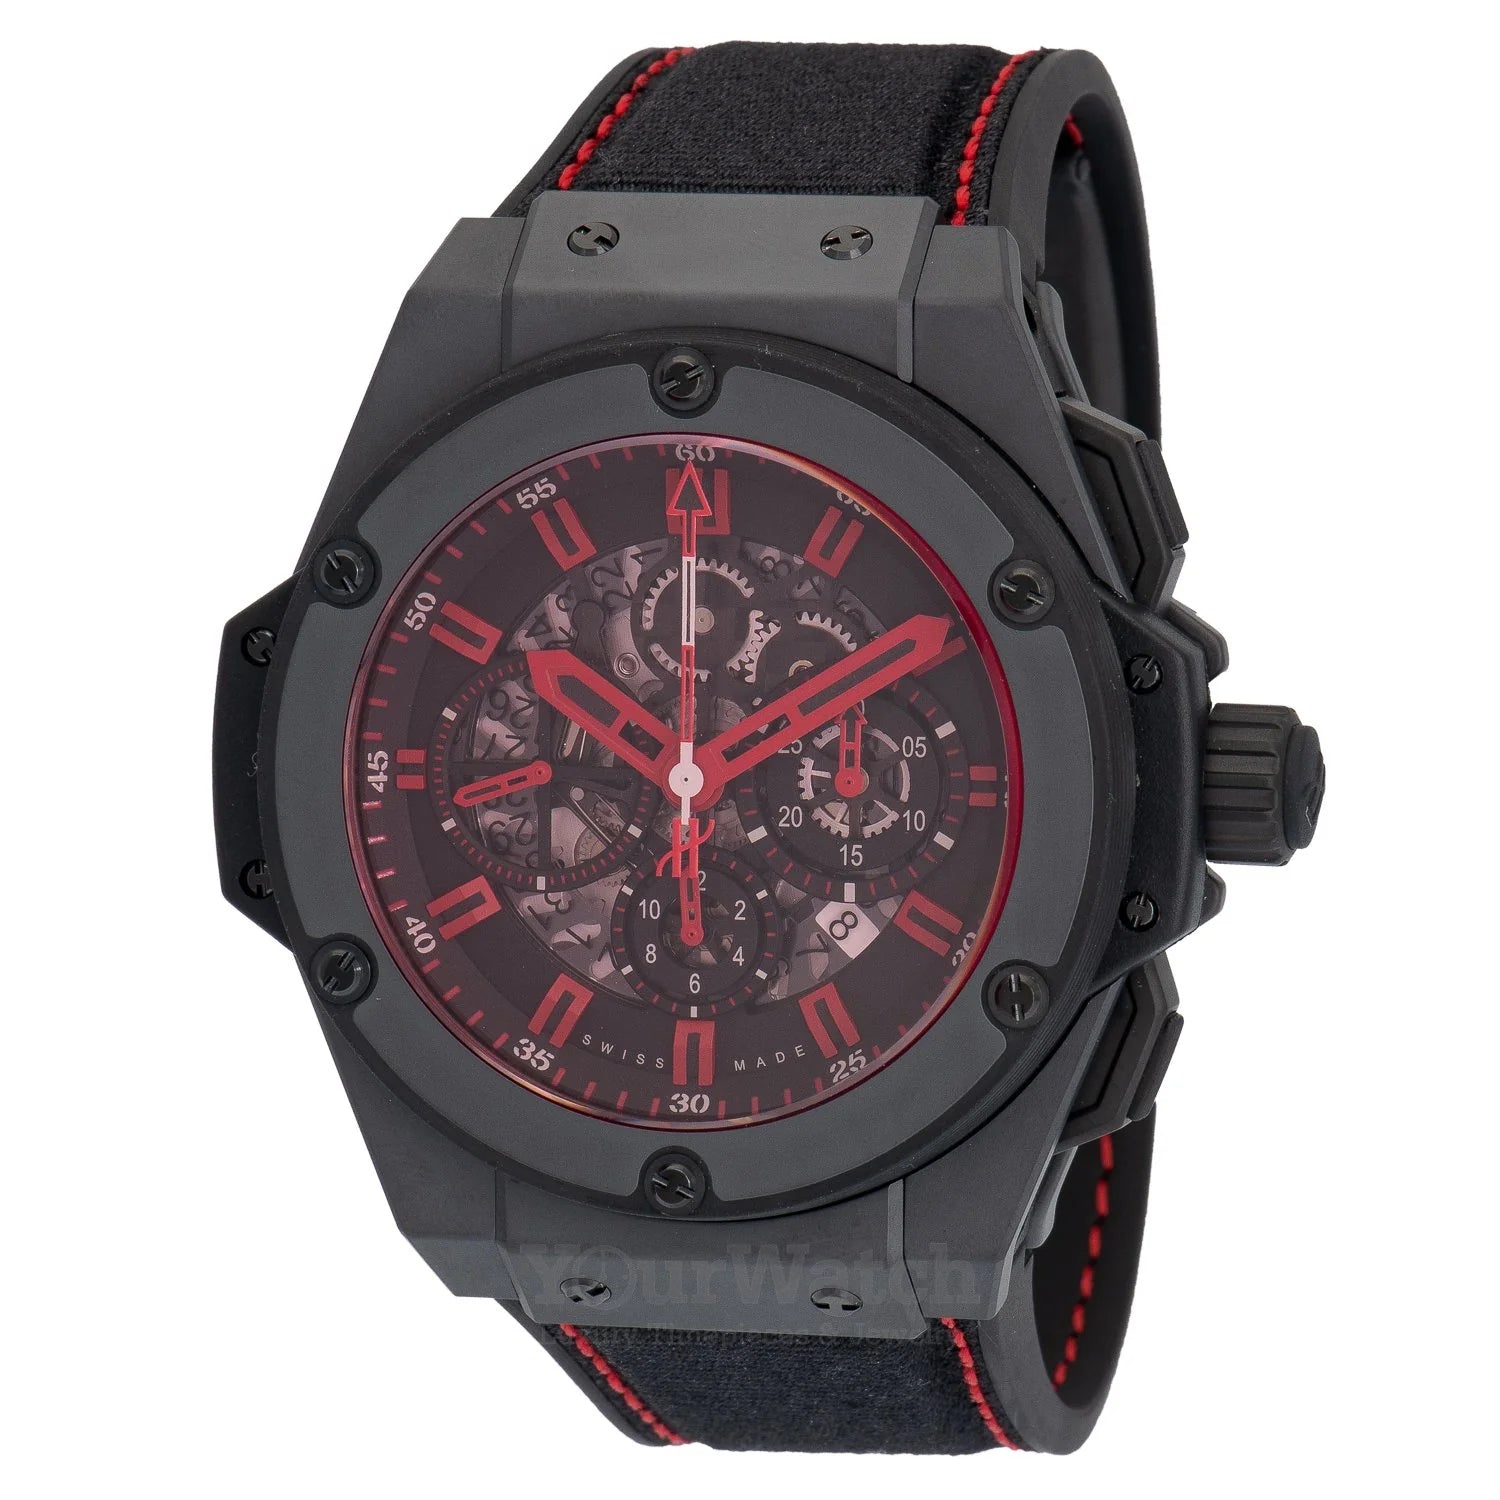 Hublot Watches - Yourwatch - Luxury Swiss Watches - Authentic ...